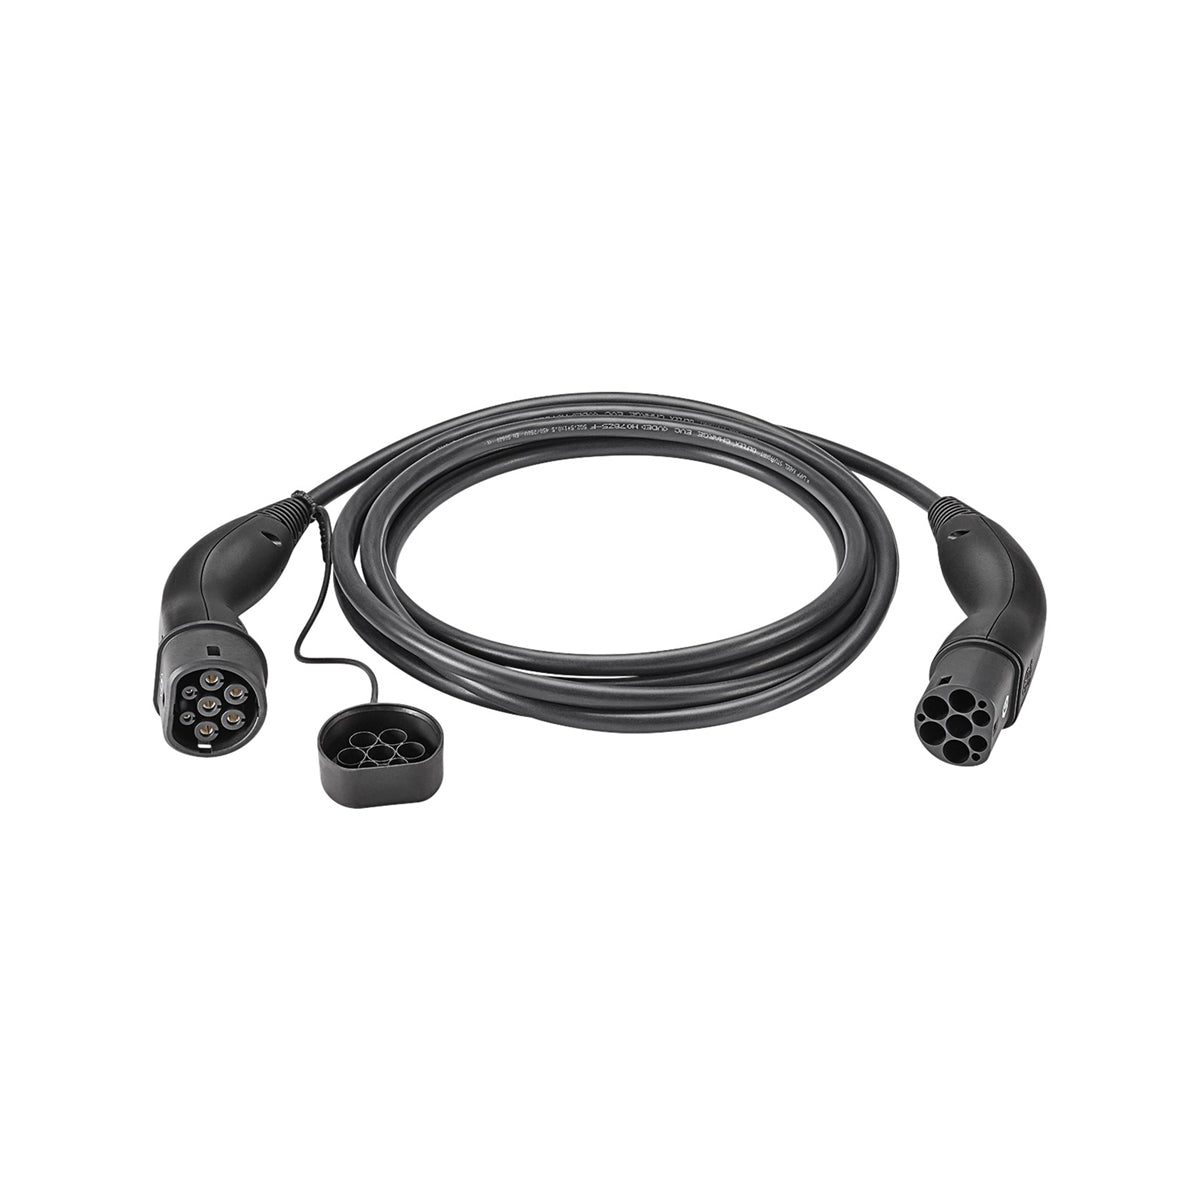 LAPP EV Charge Cable Type 2 (22kW-3P-32A) 7m - Black.